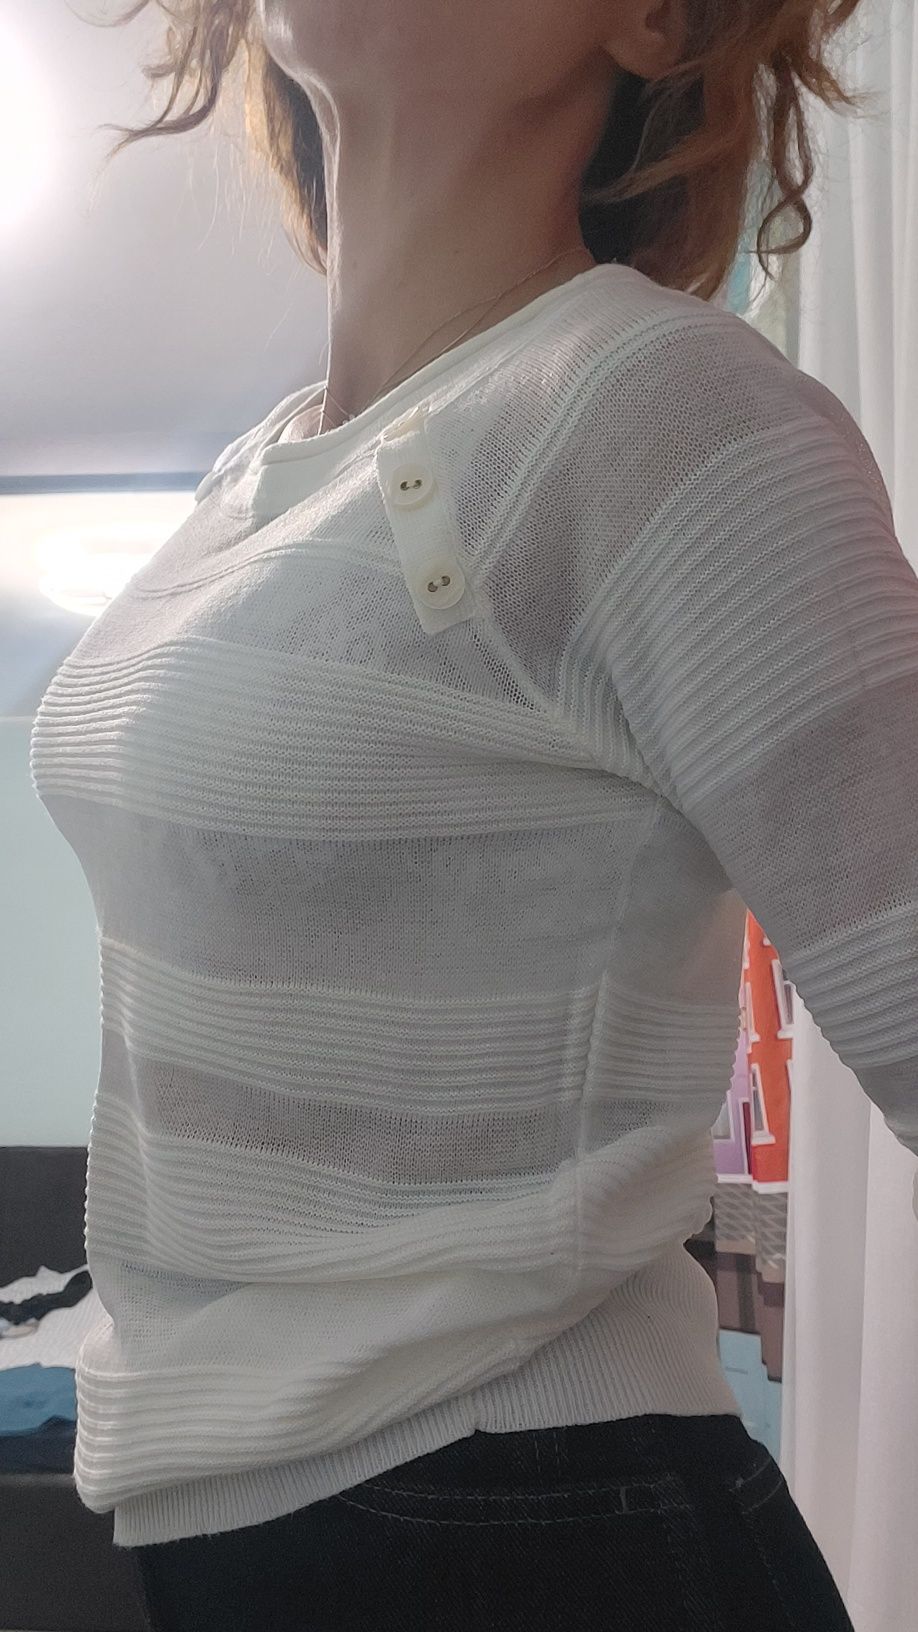 Bluza/ pulover Ana Field, alb, marimea xs